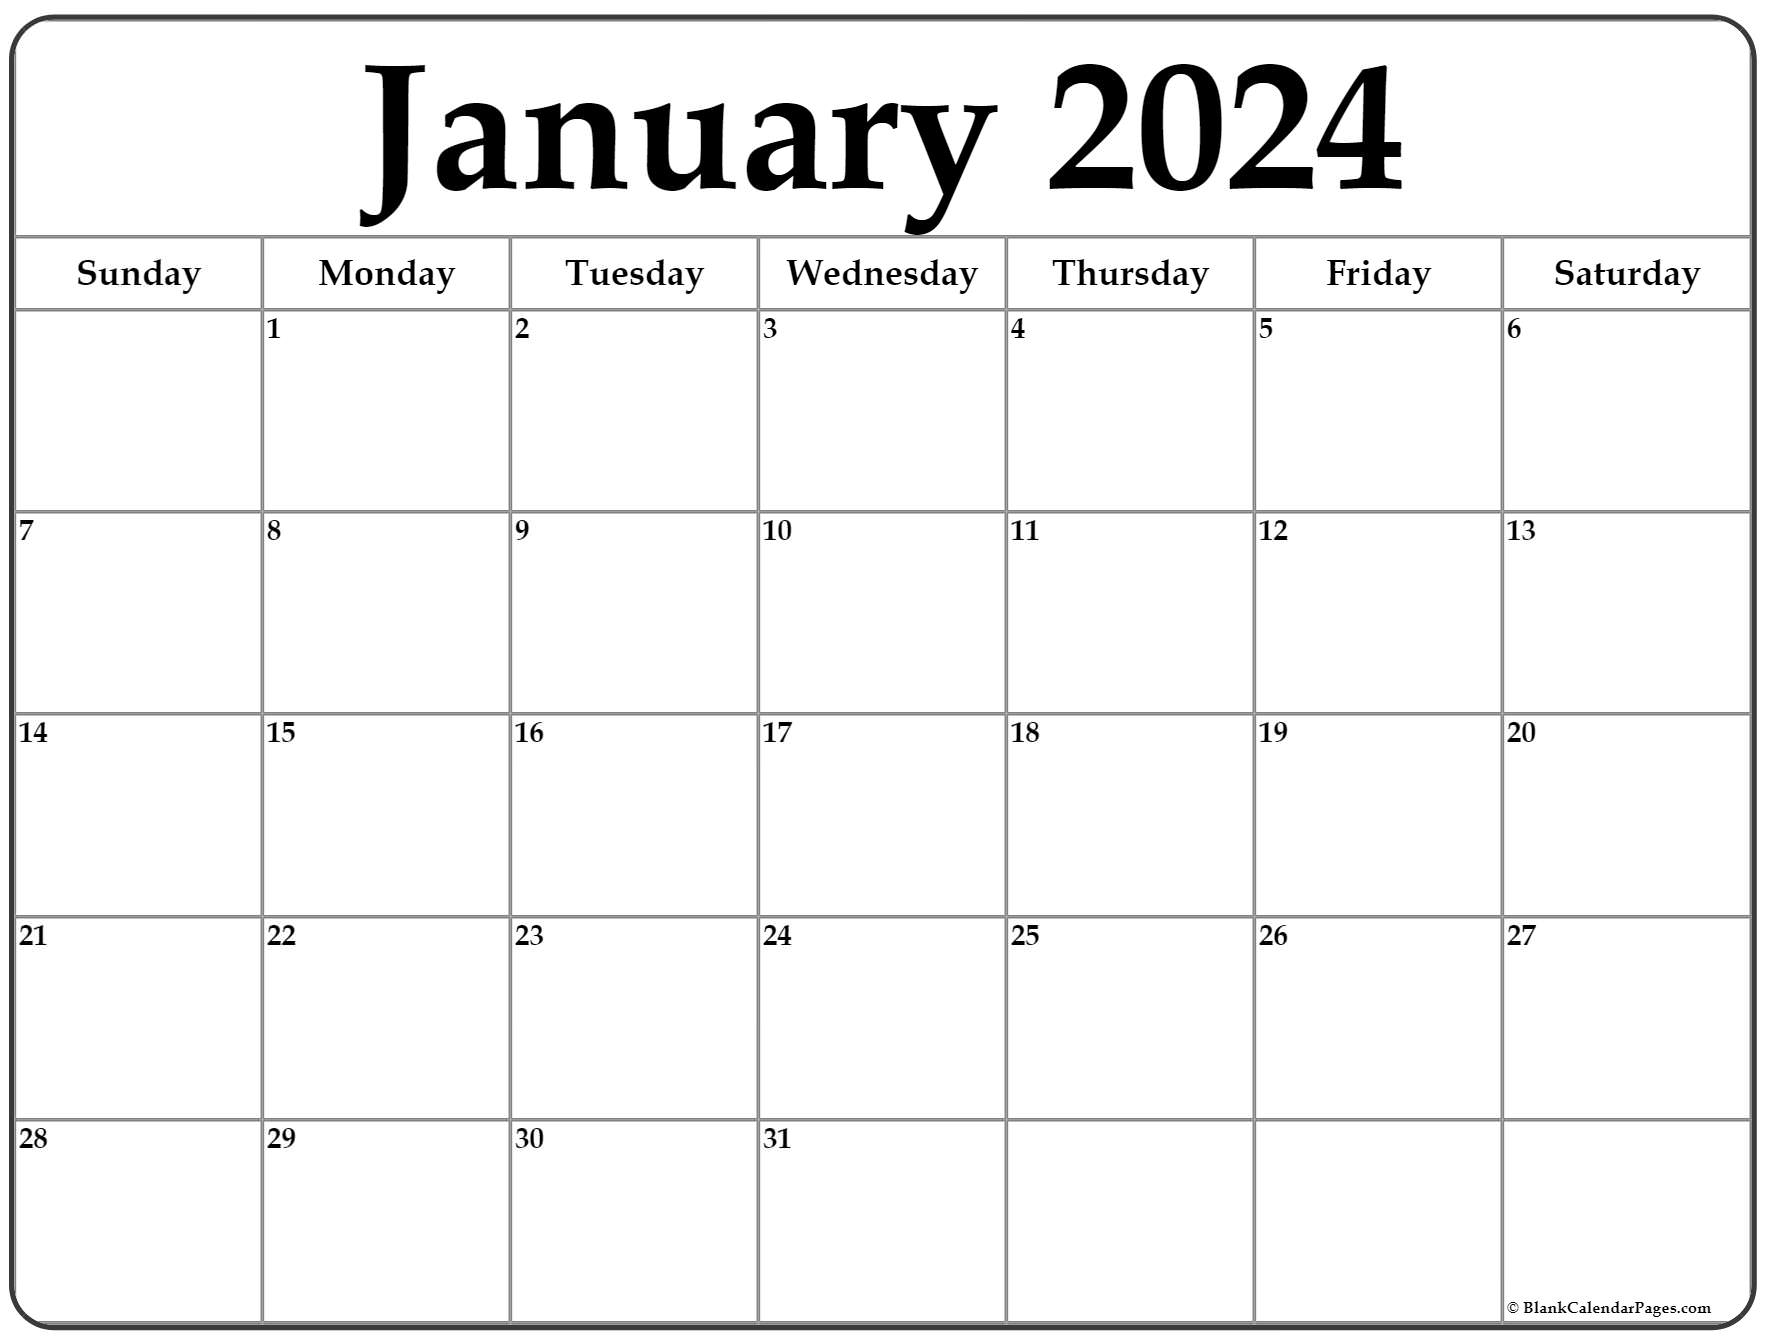 January 2024 Calendar | Free Printable Calendar for Monthly Calendar Printable Free 2024